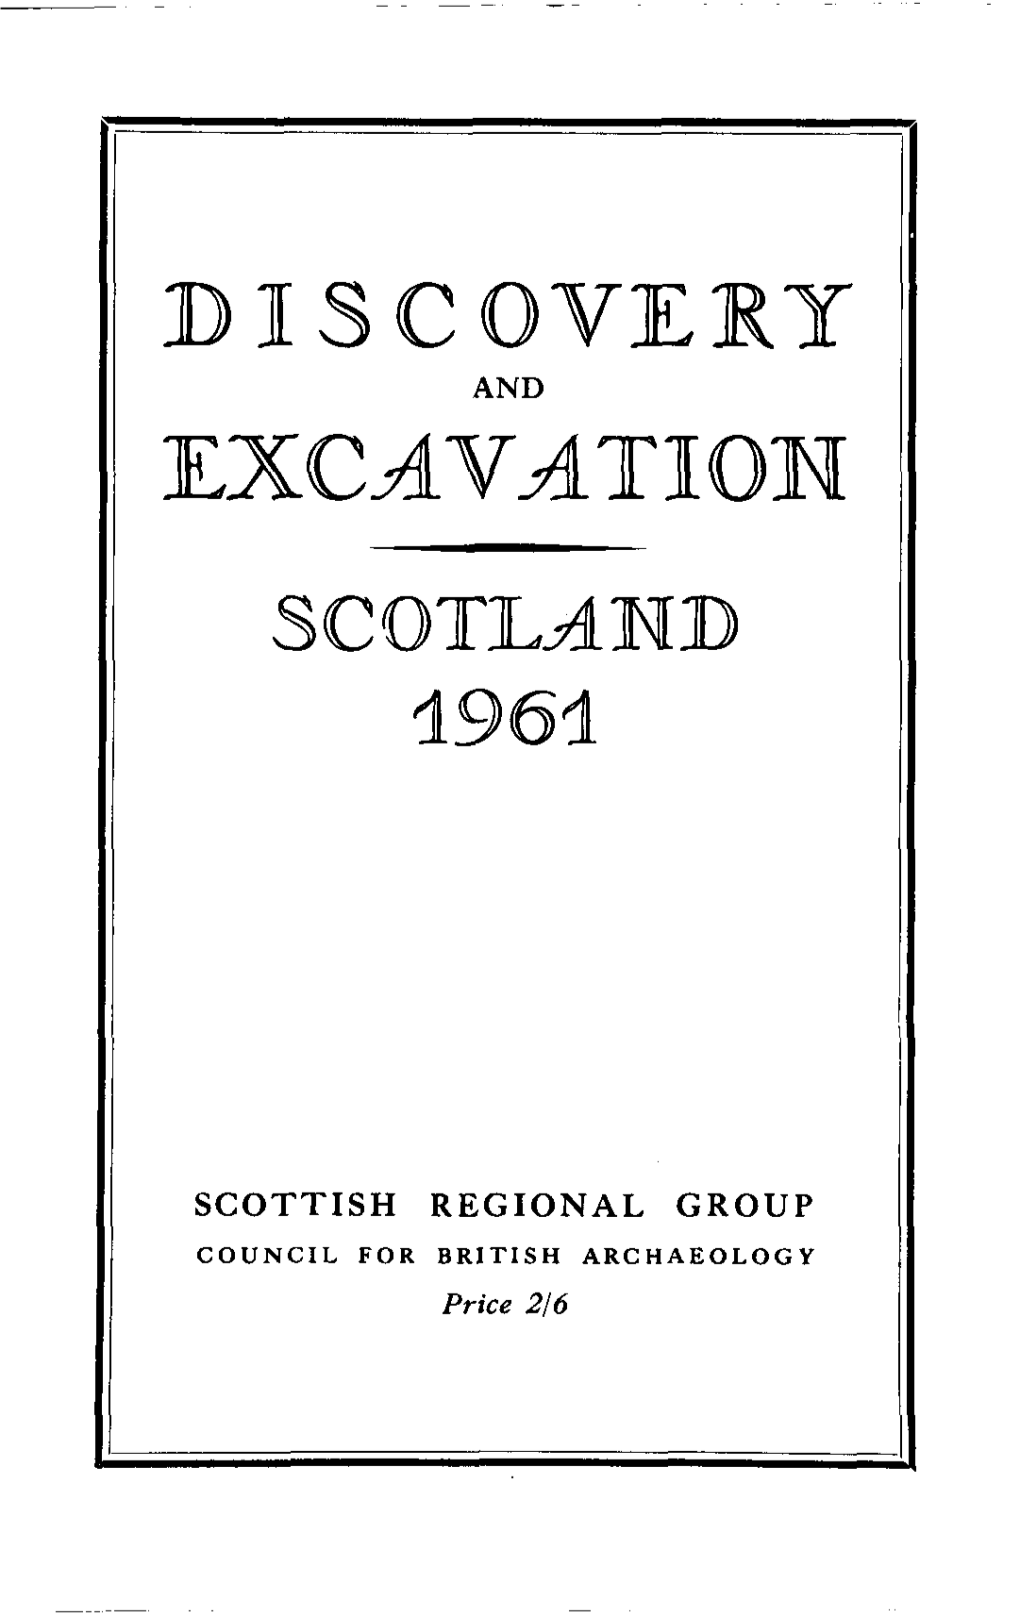 EXCAVATION SCOTL^Letb 1961